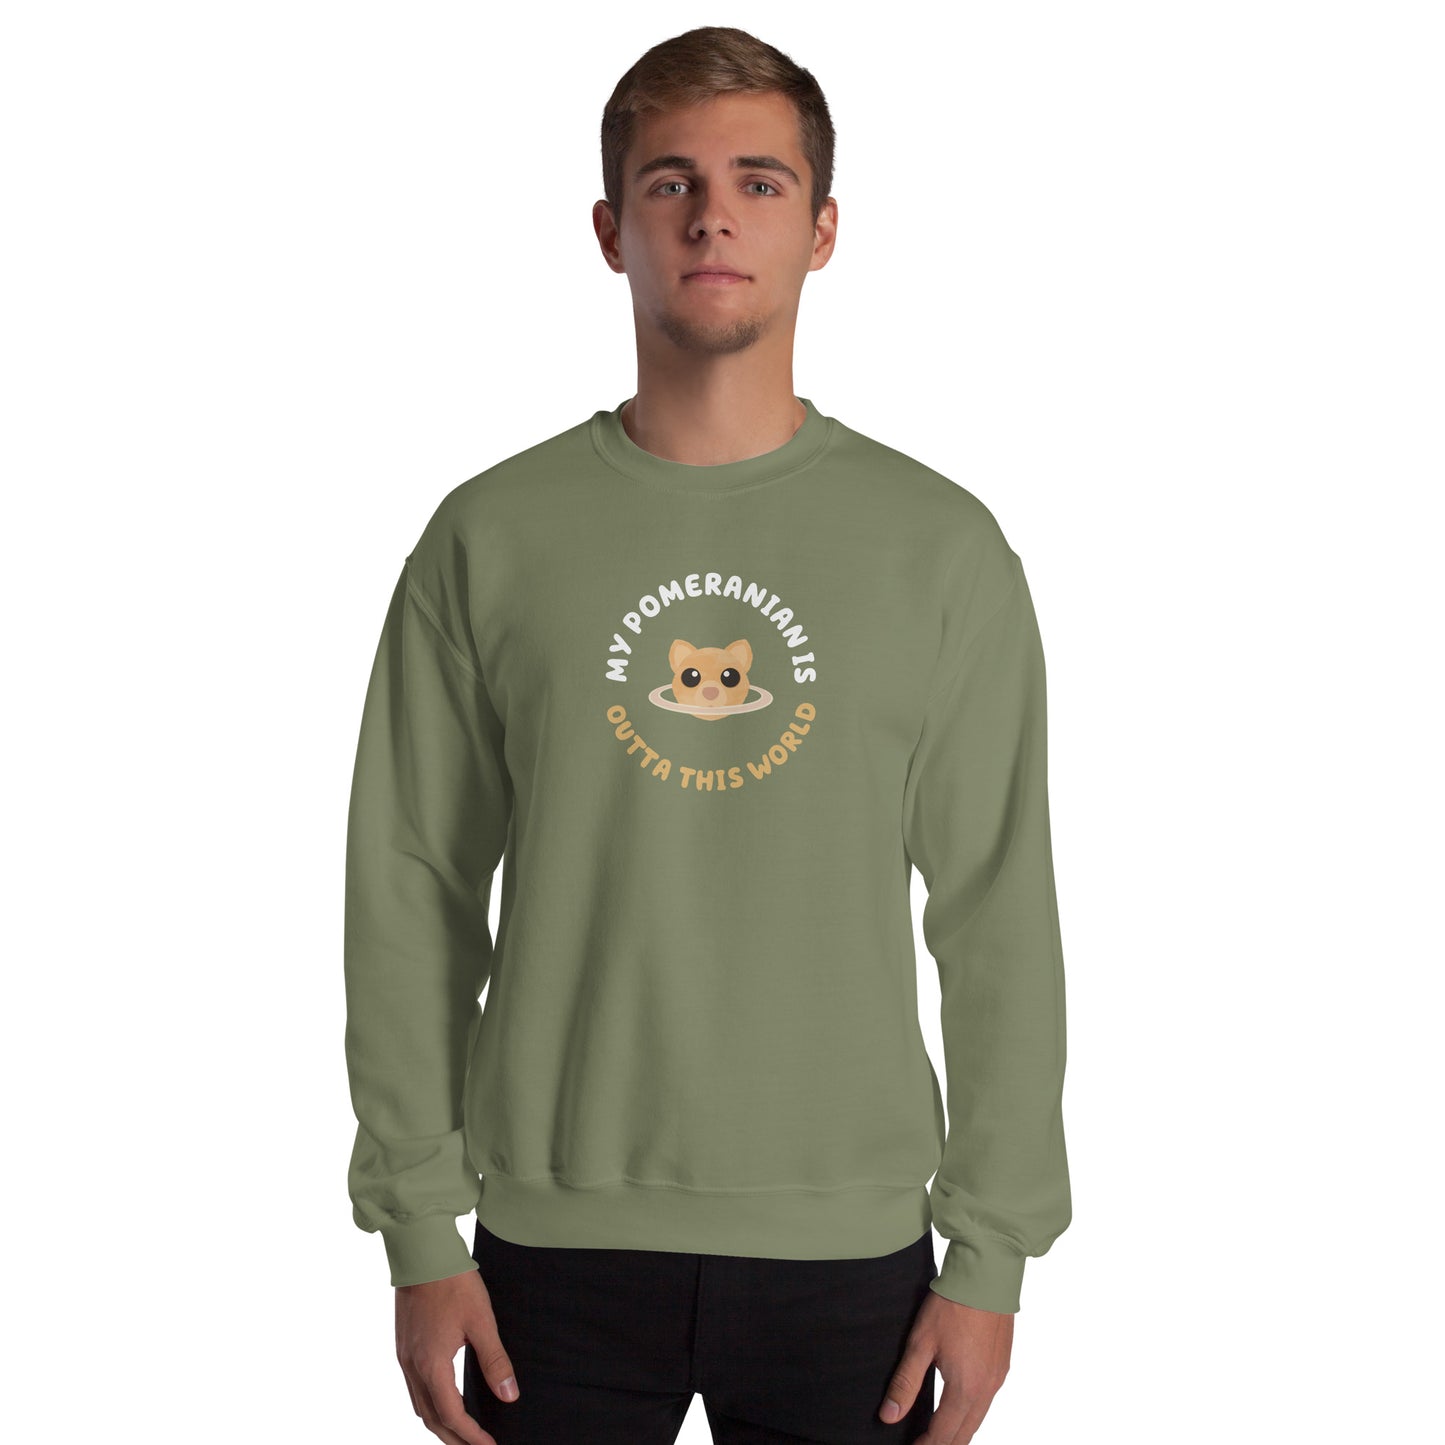 Astro-Mutts Outta This World Unisex Sweatshirt - Pomeranian